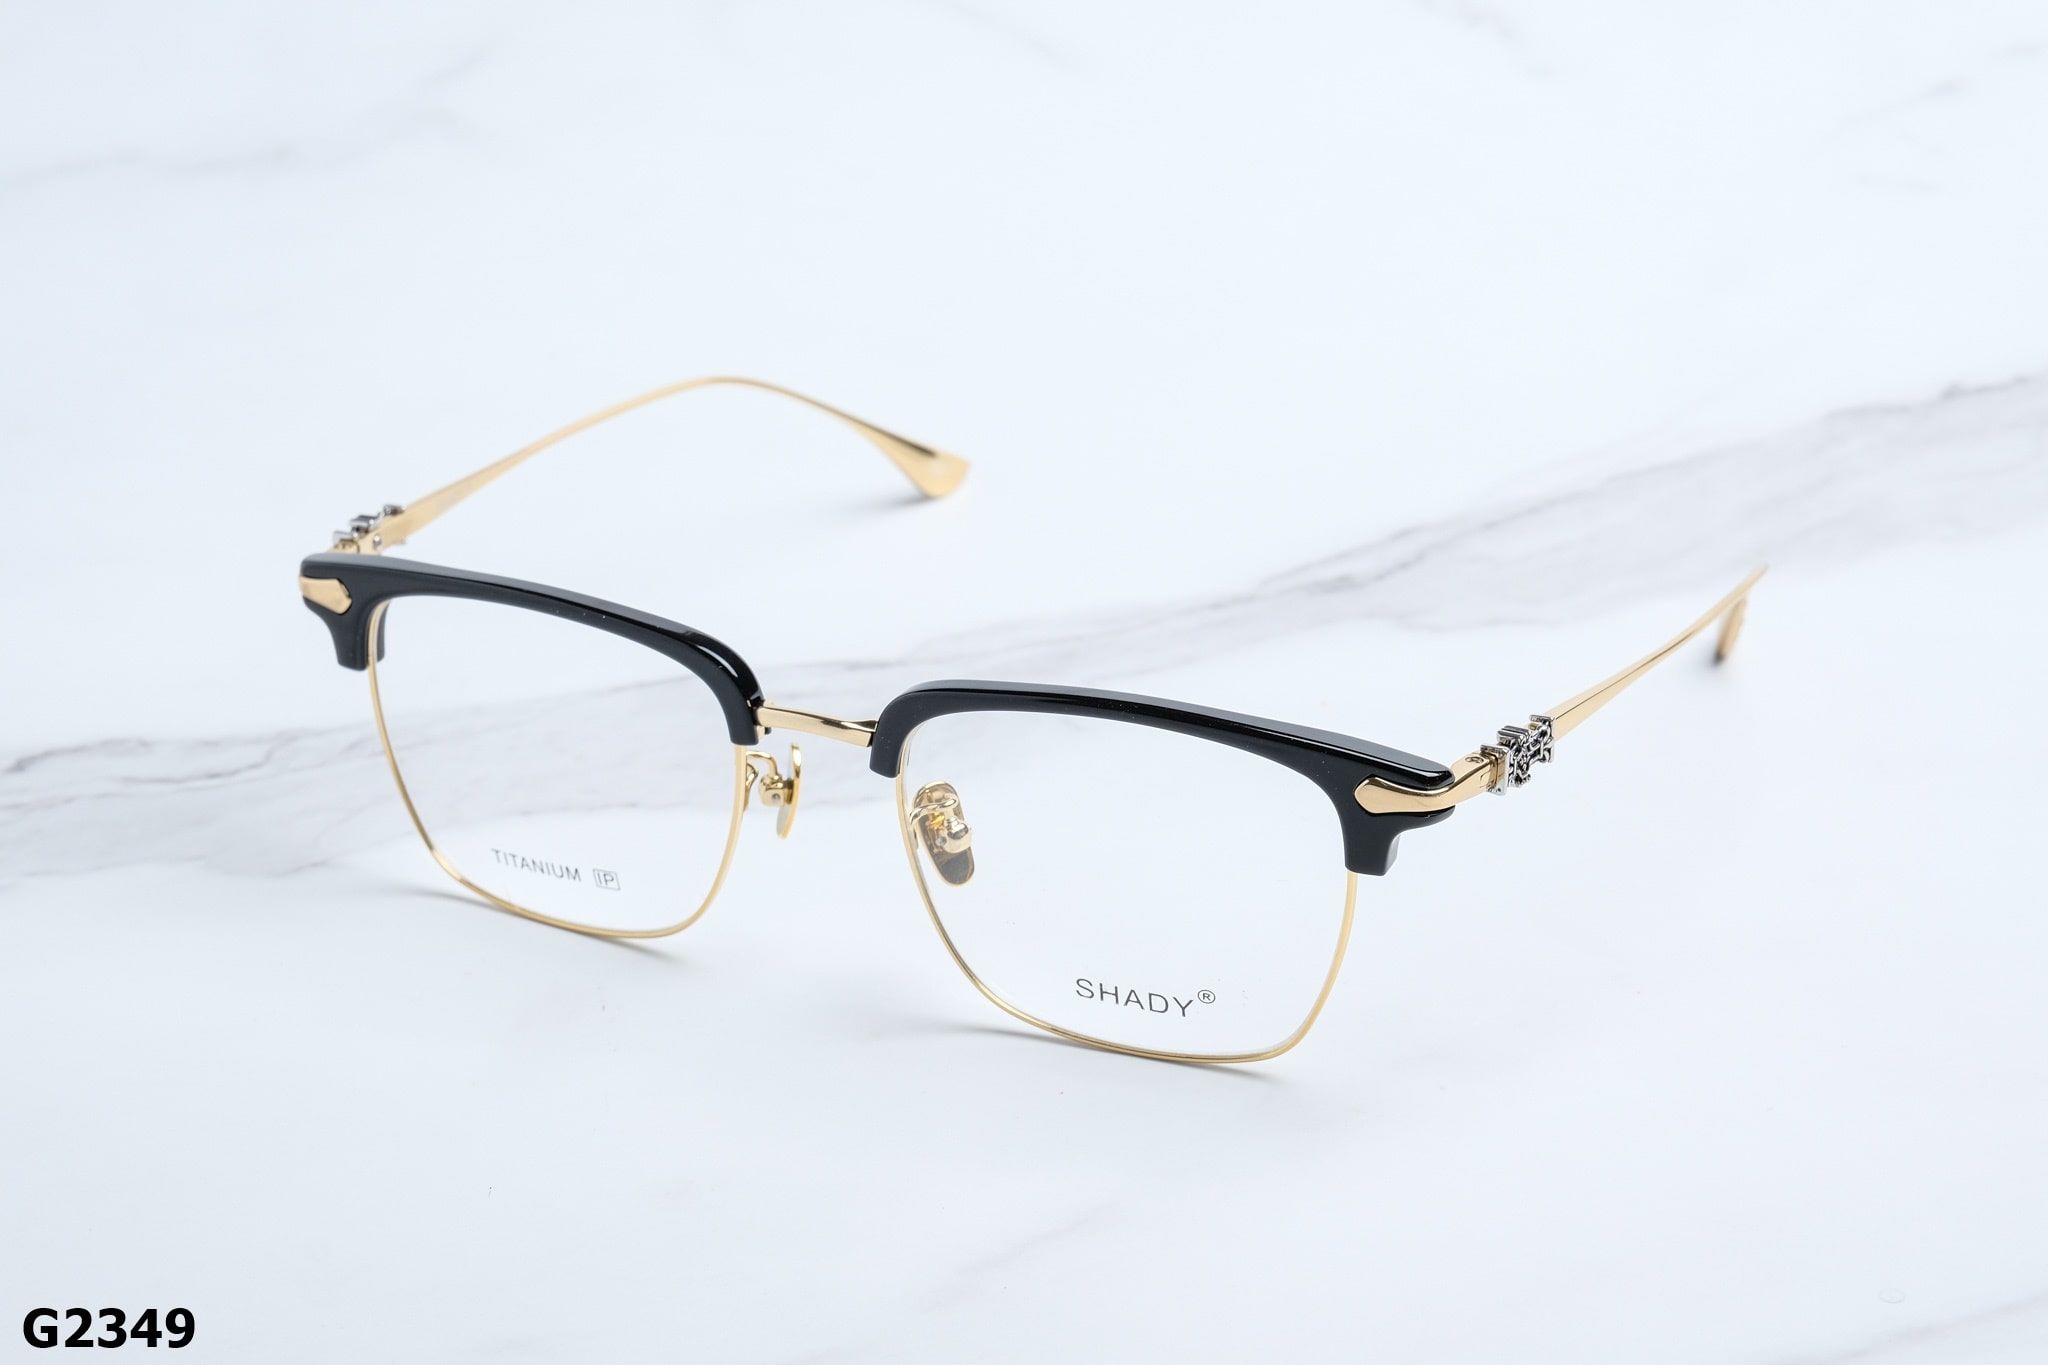  SHADY Eyewear - Glasses - G2349 